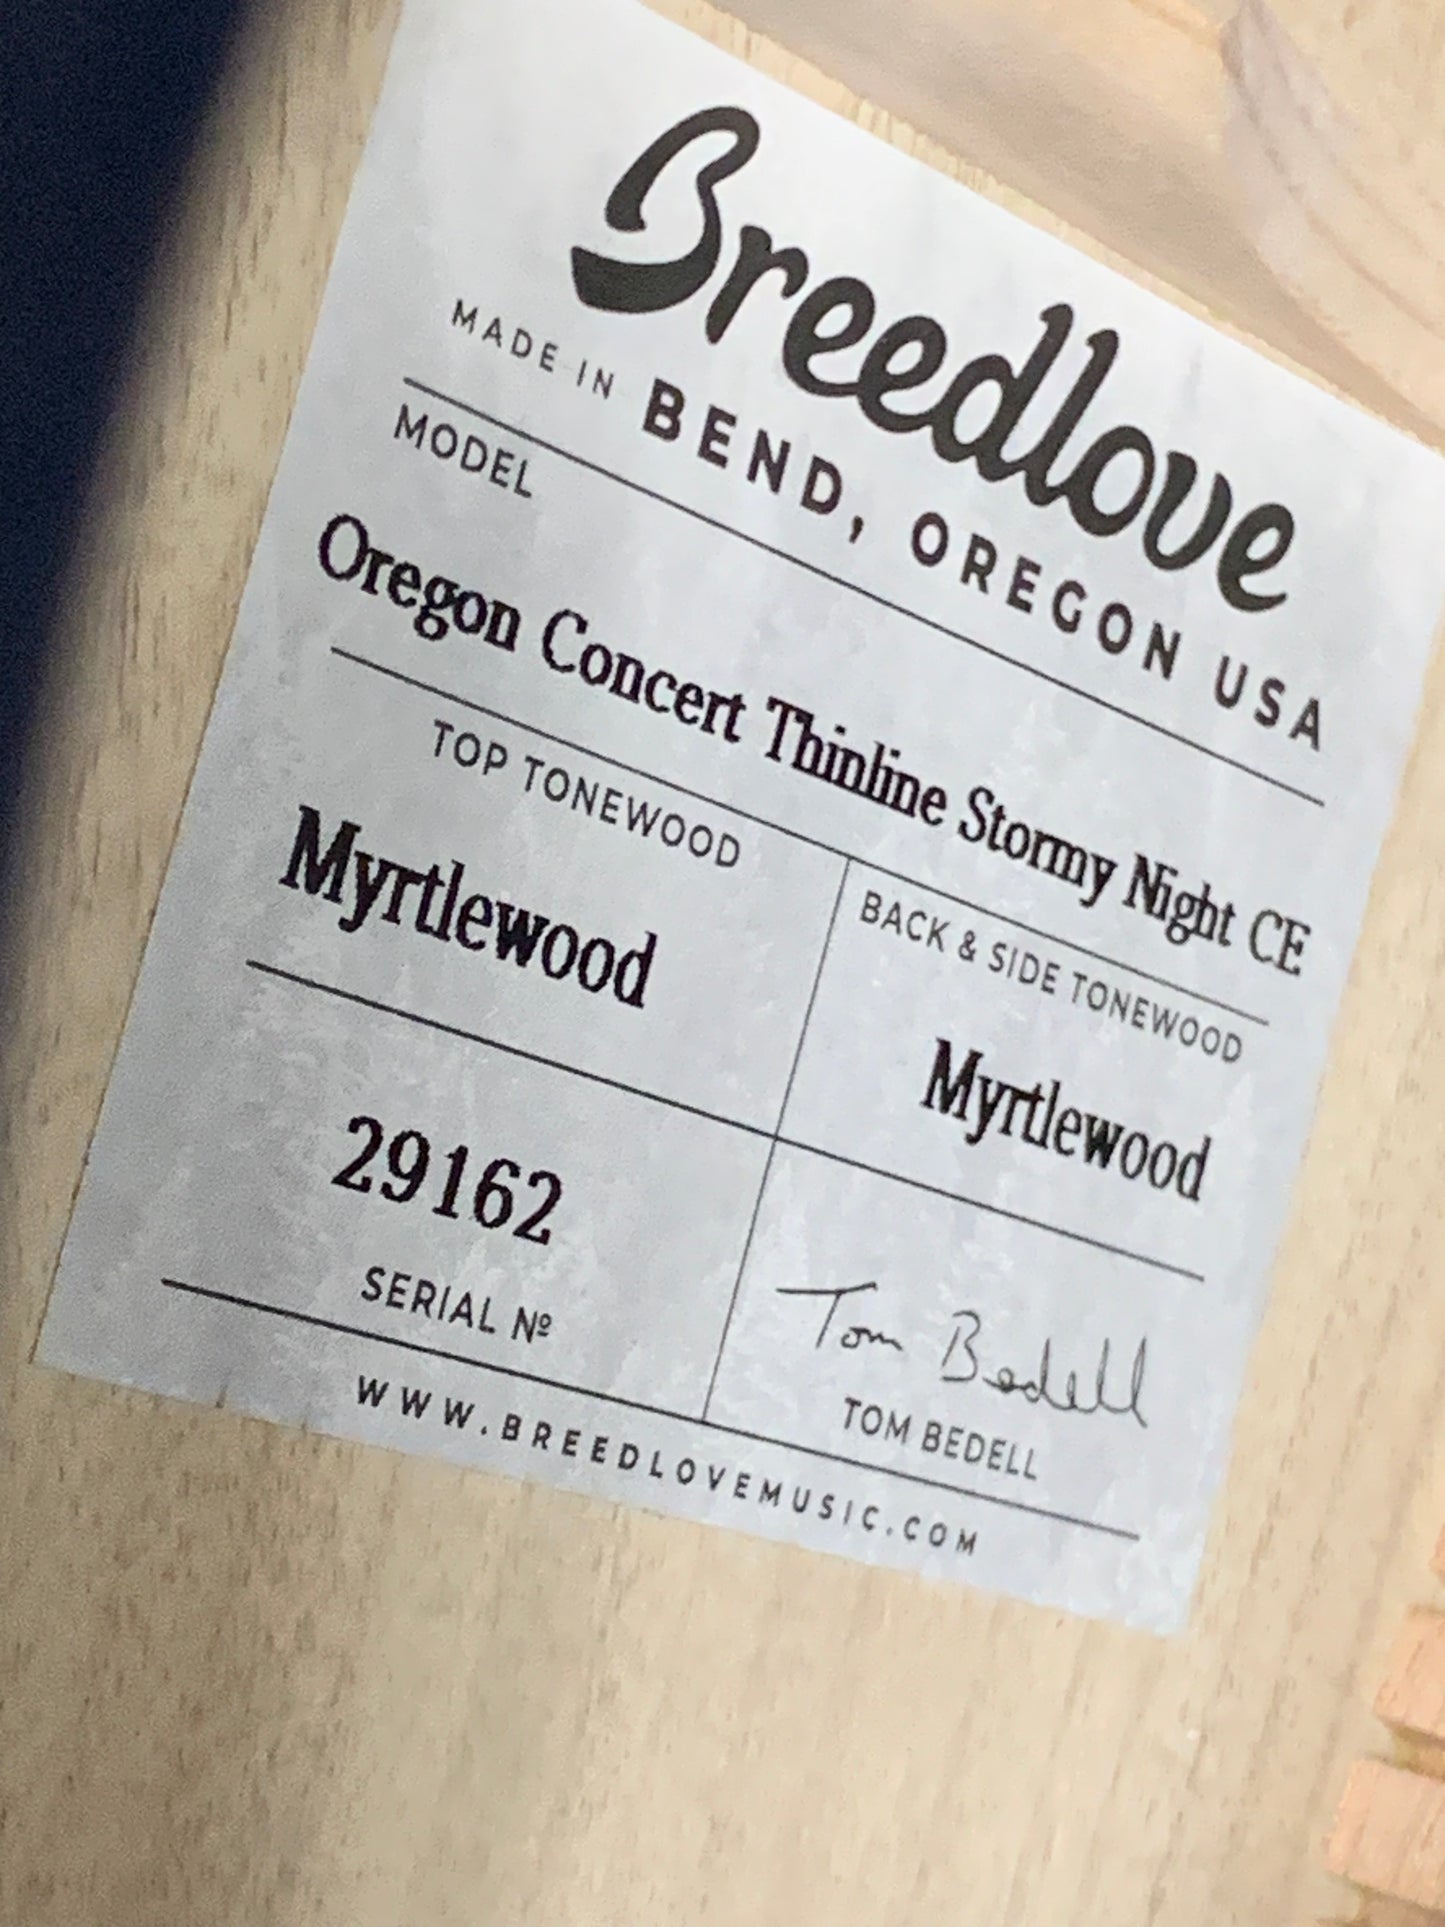 Breedlove Oregon Concert Thinline Stormy Night CE #29162